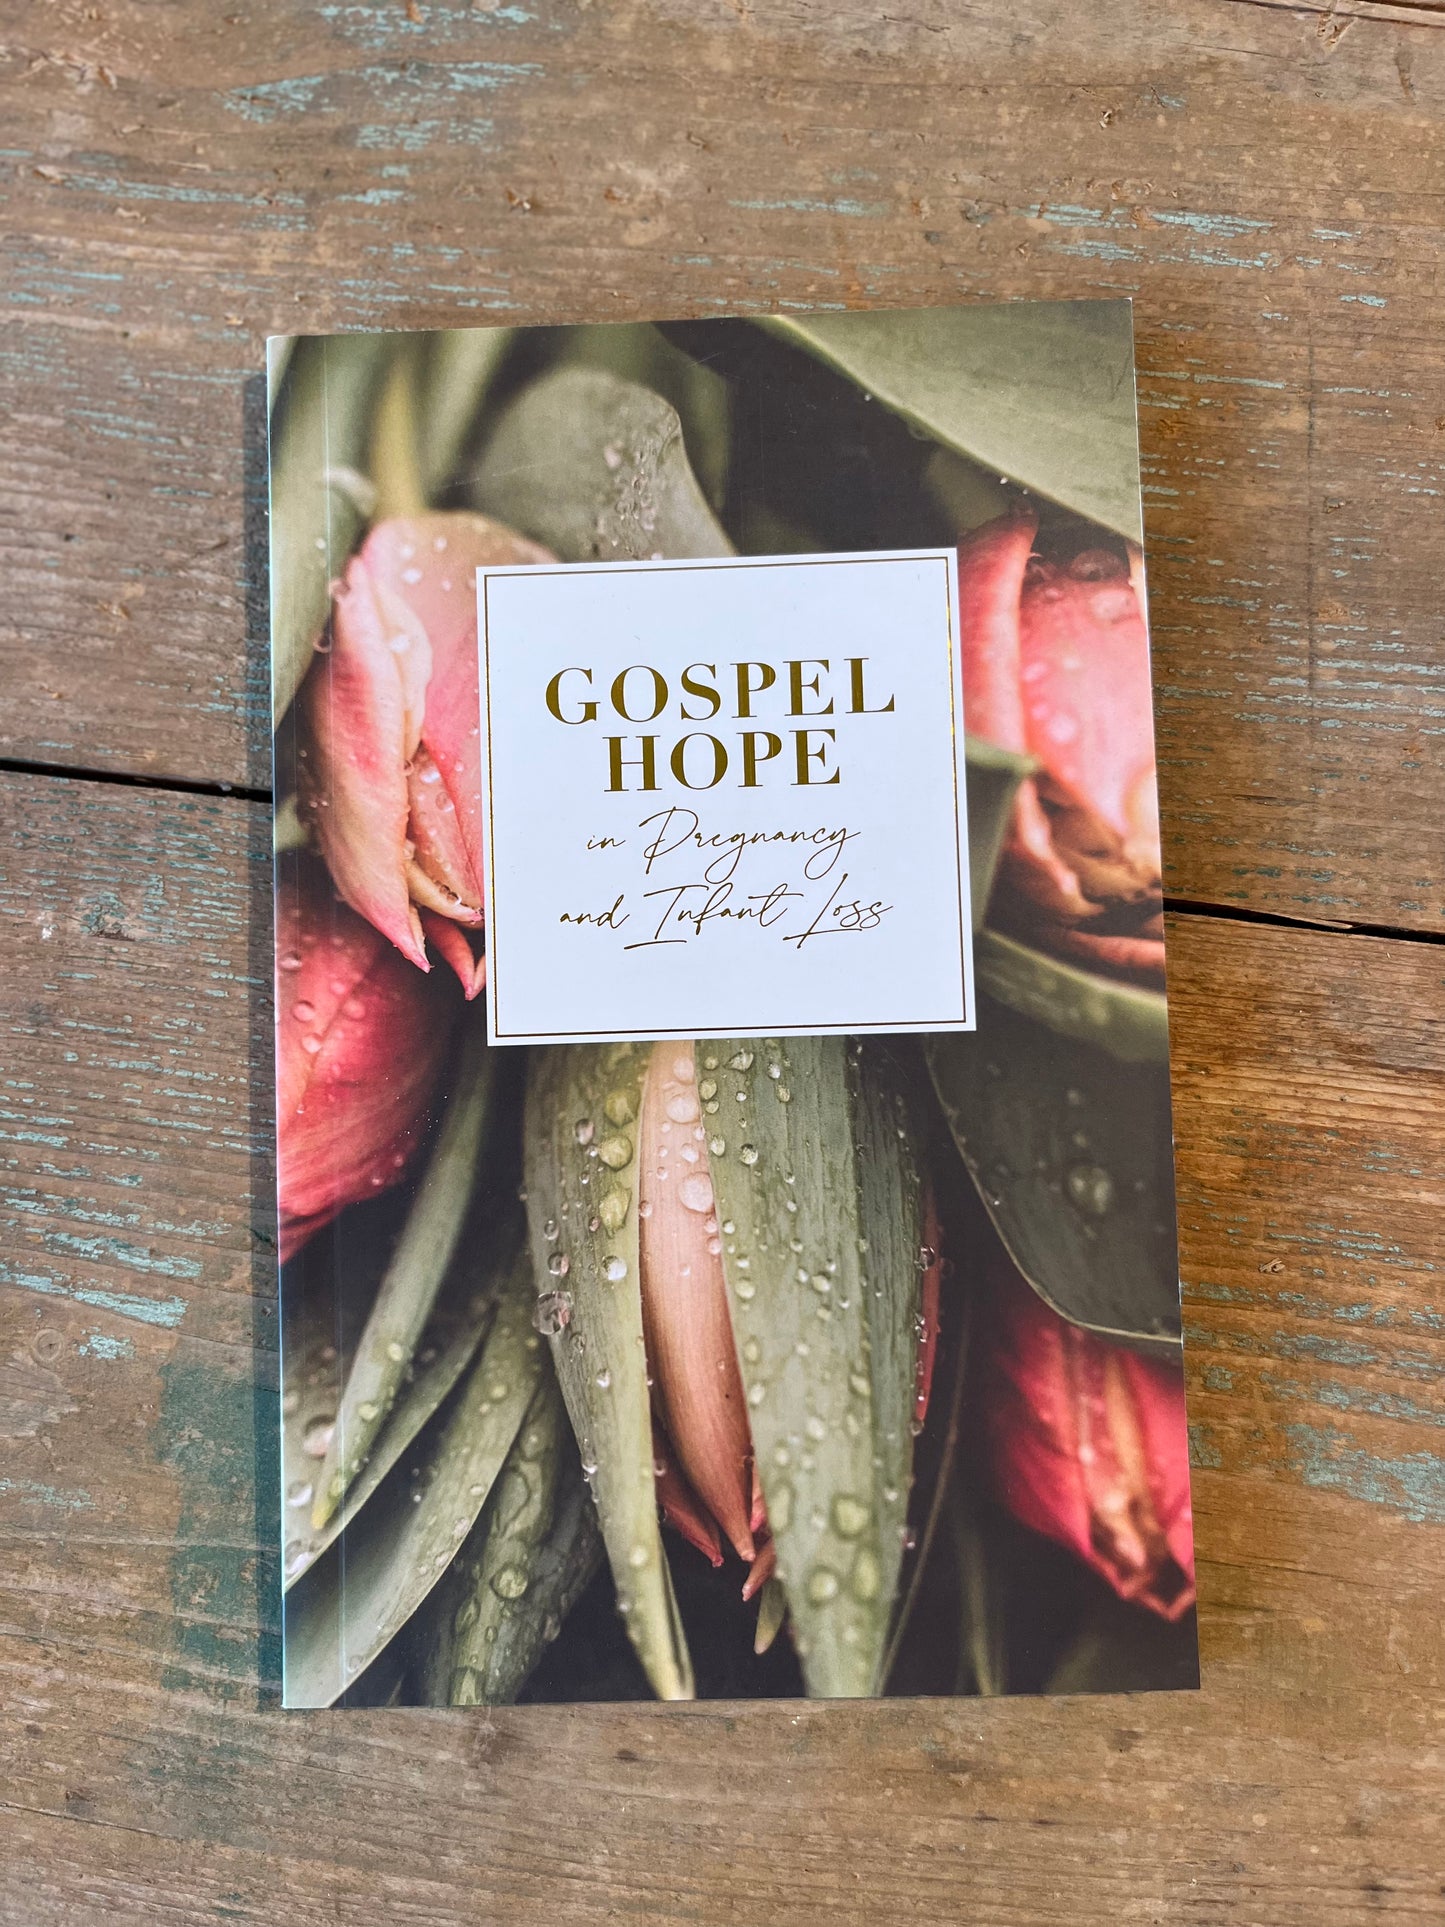 Gospel Hope in Pregnancy and Infant Loss